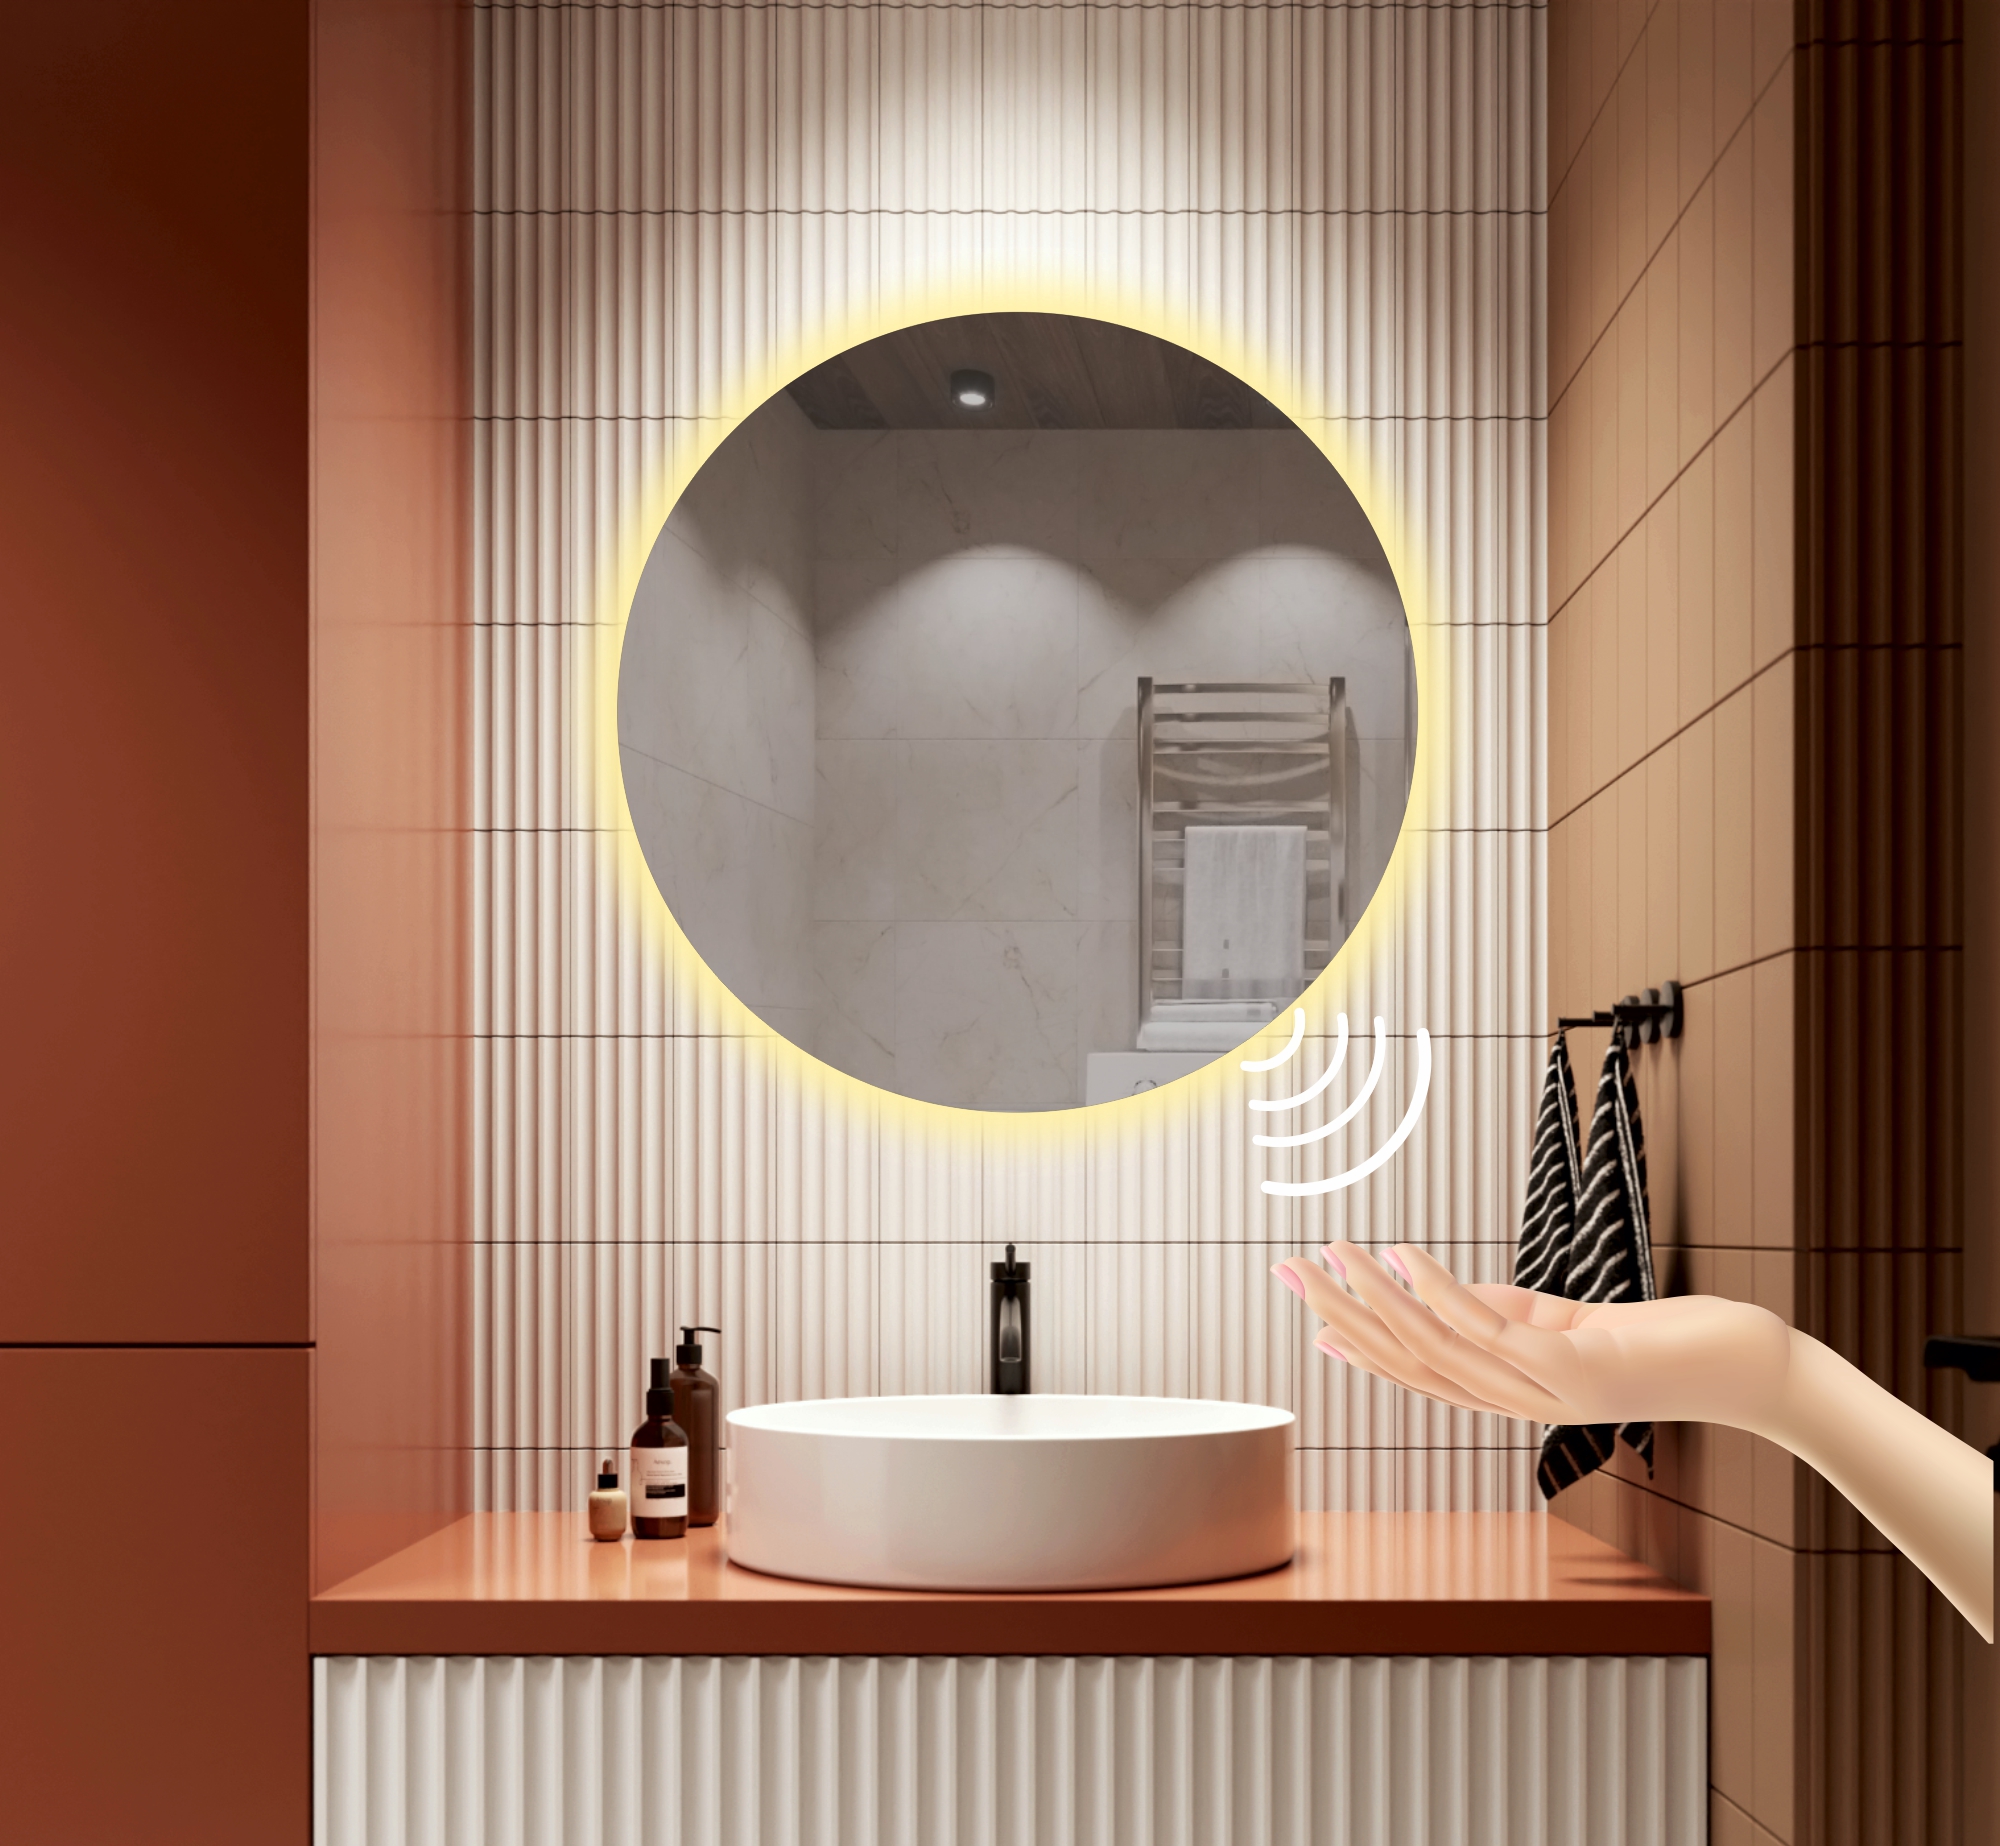 Зеркало для ванной Alfa Mirrors с теплой подсветкой 3200К круглое 50см, арт. Na-5Vzt